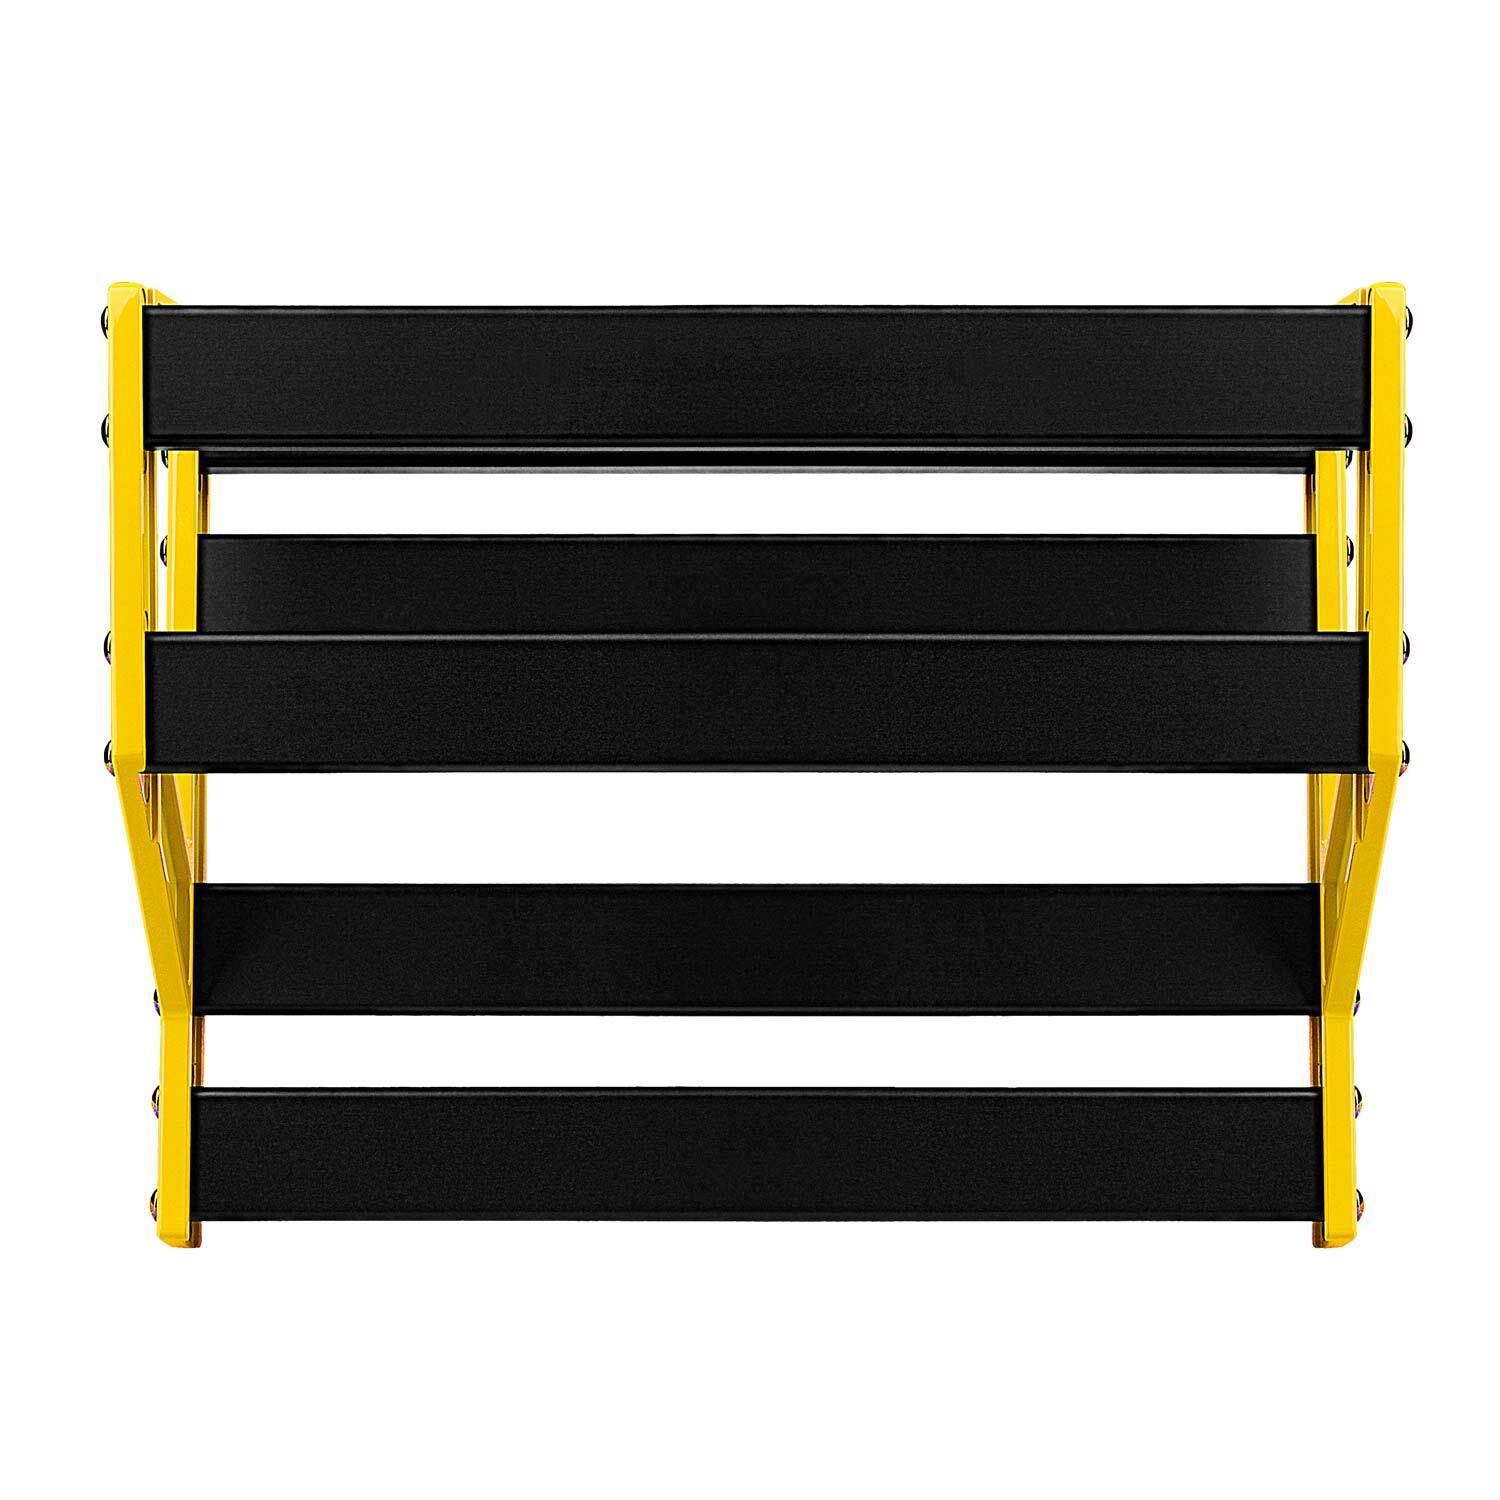 NUX Bumblebee Pedalboard [Large]